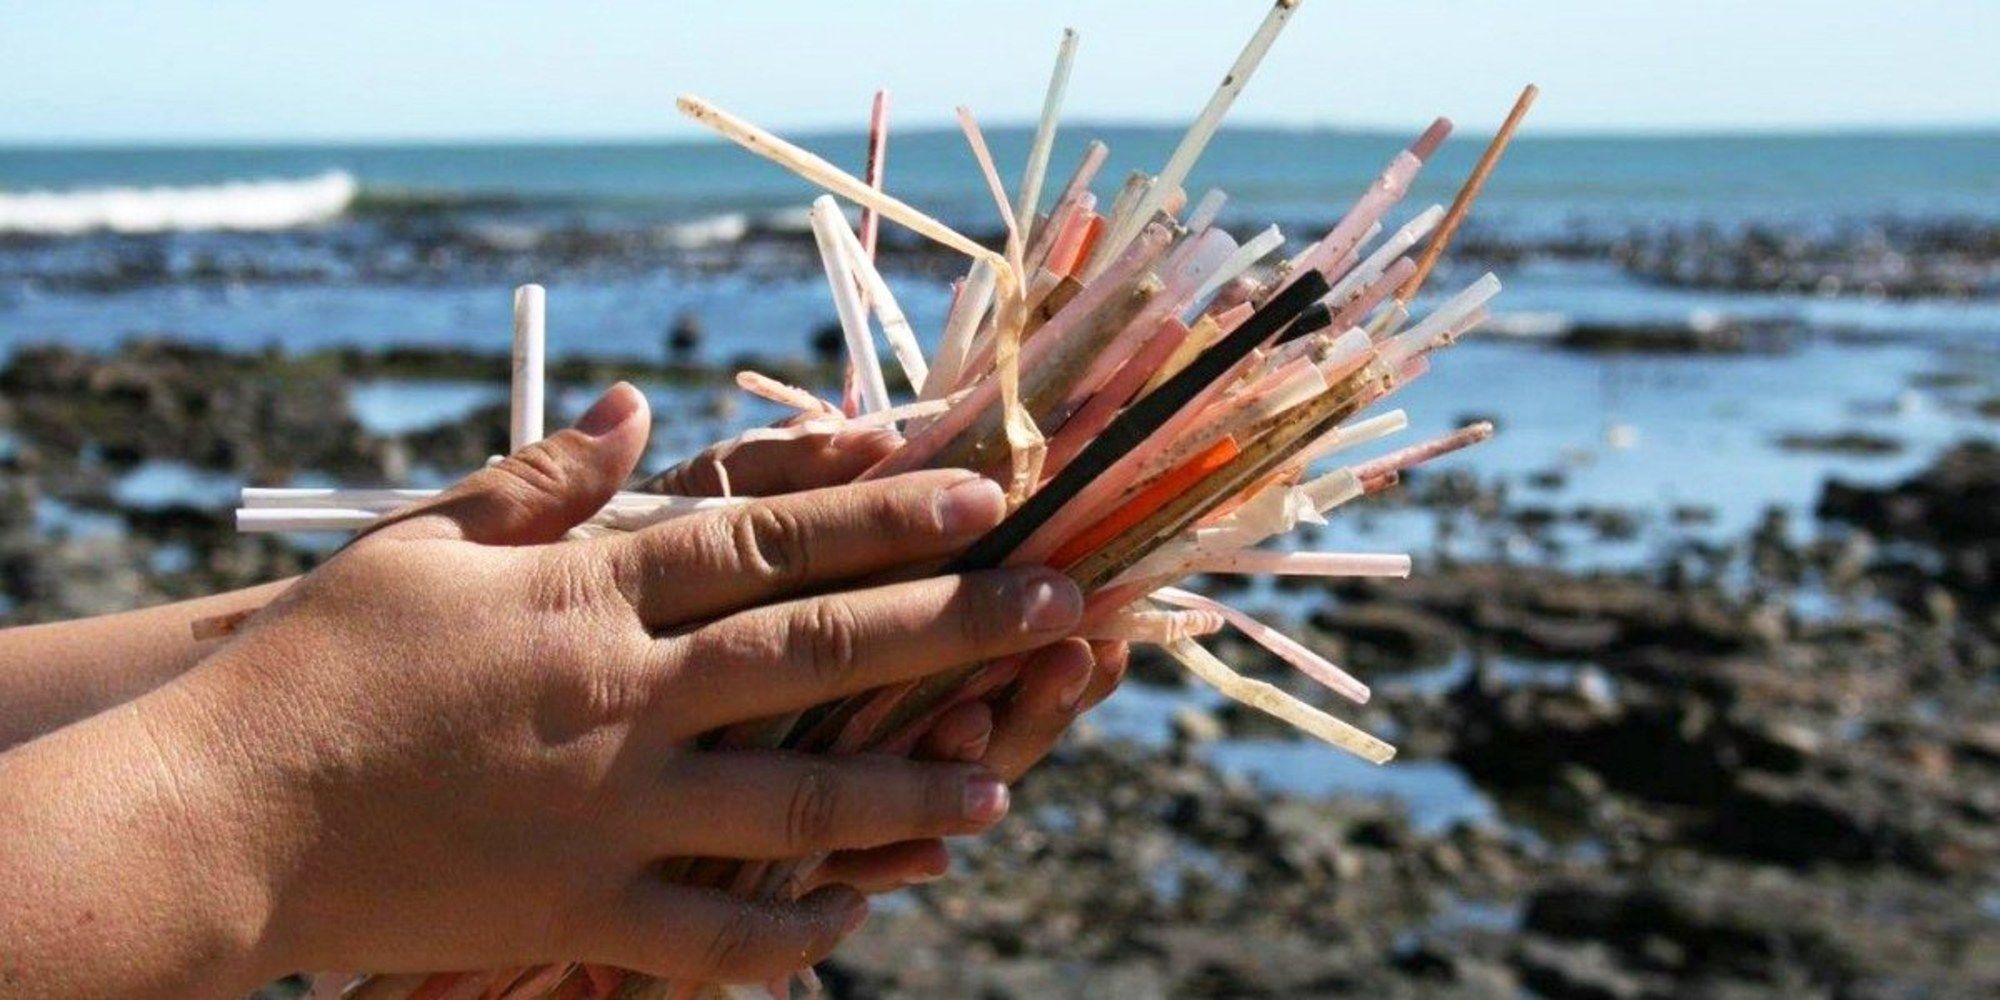 Plastic Straws kill marine life and release toxic pollutants